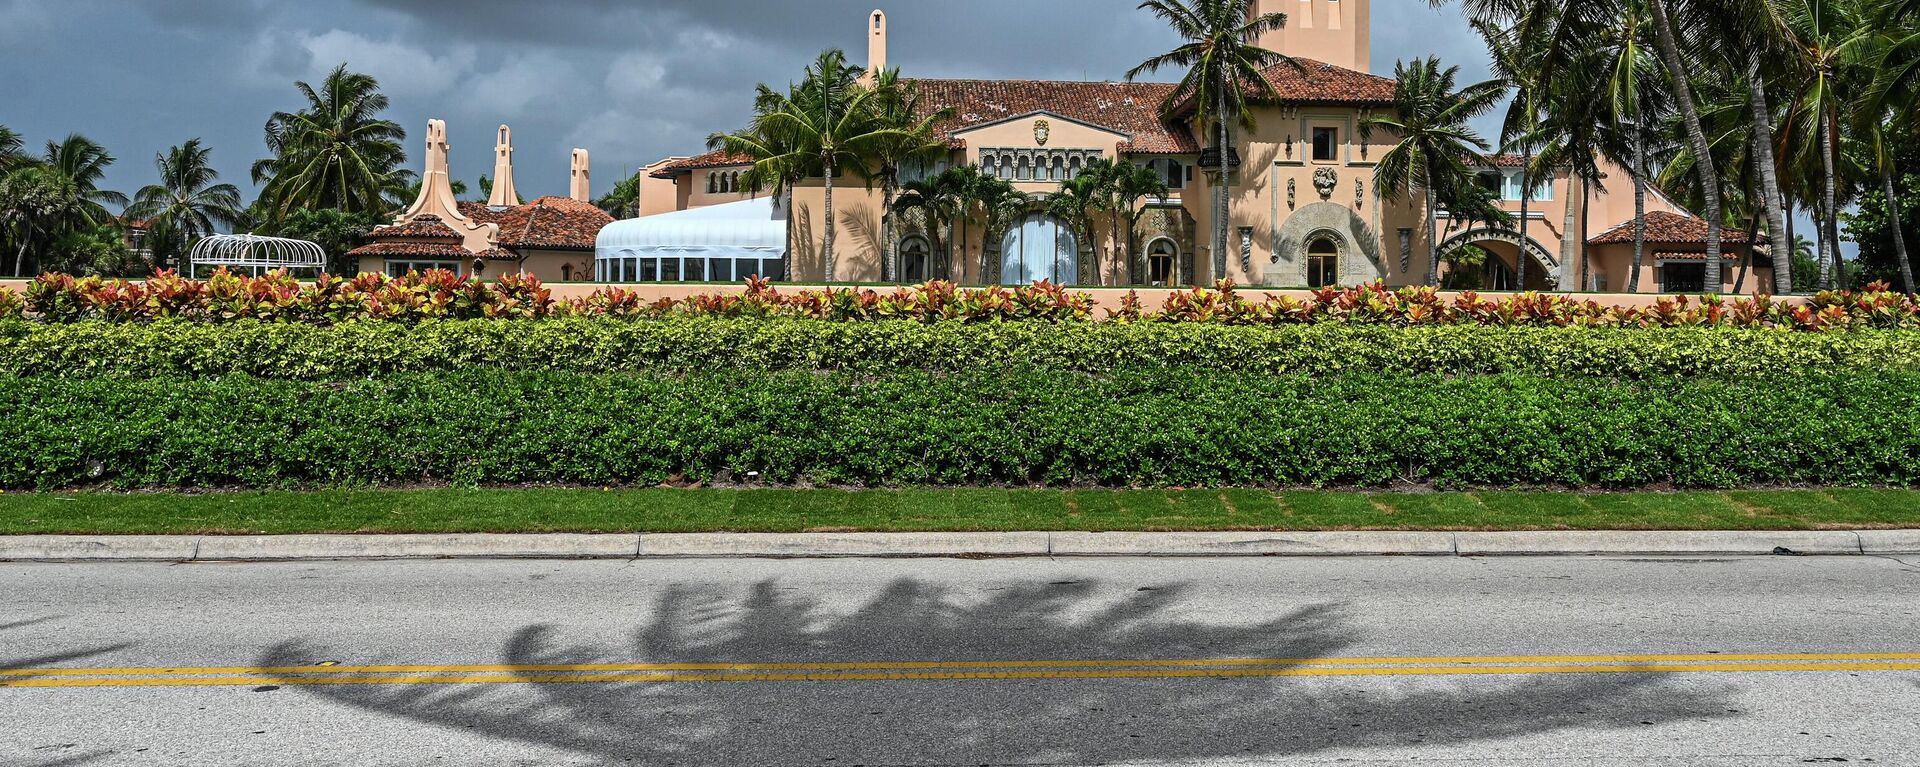 Former US President Donald Trump's residence in Mar-A-Lago, Palm Beach, Florida on August 9, 2022 - Sputnik International, 1920, 27.08.2022